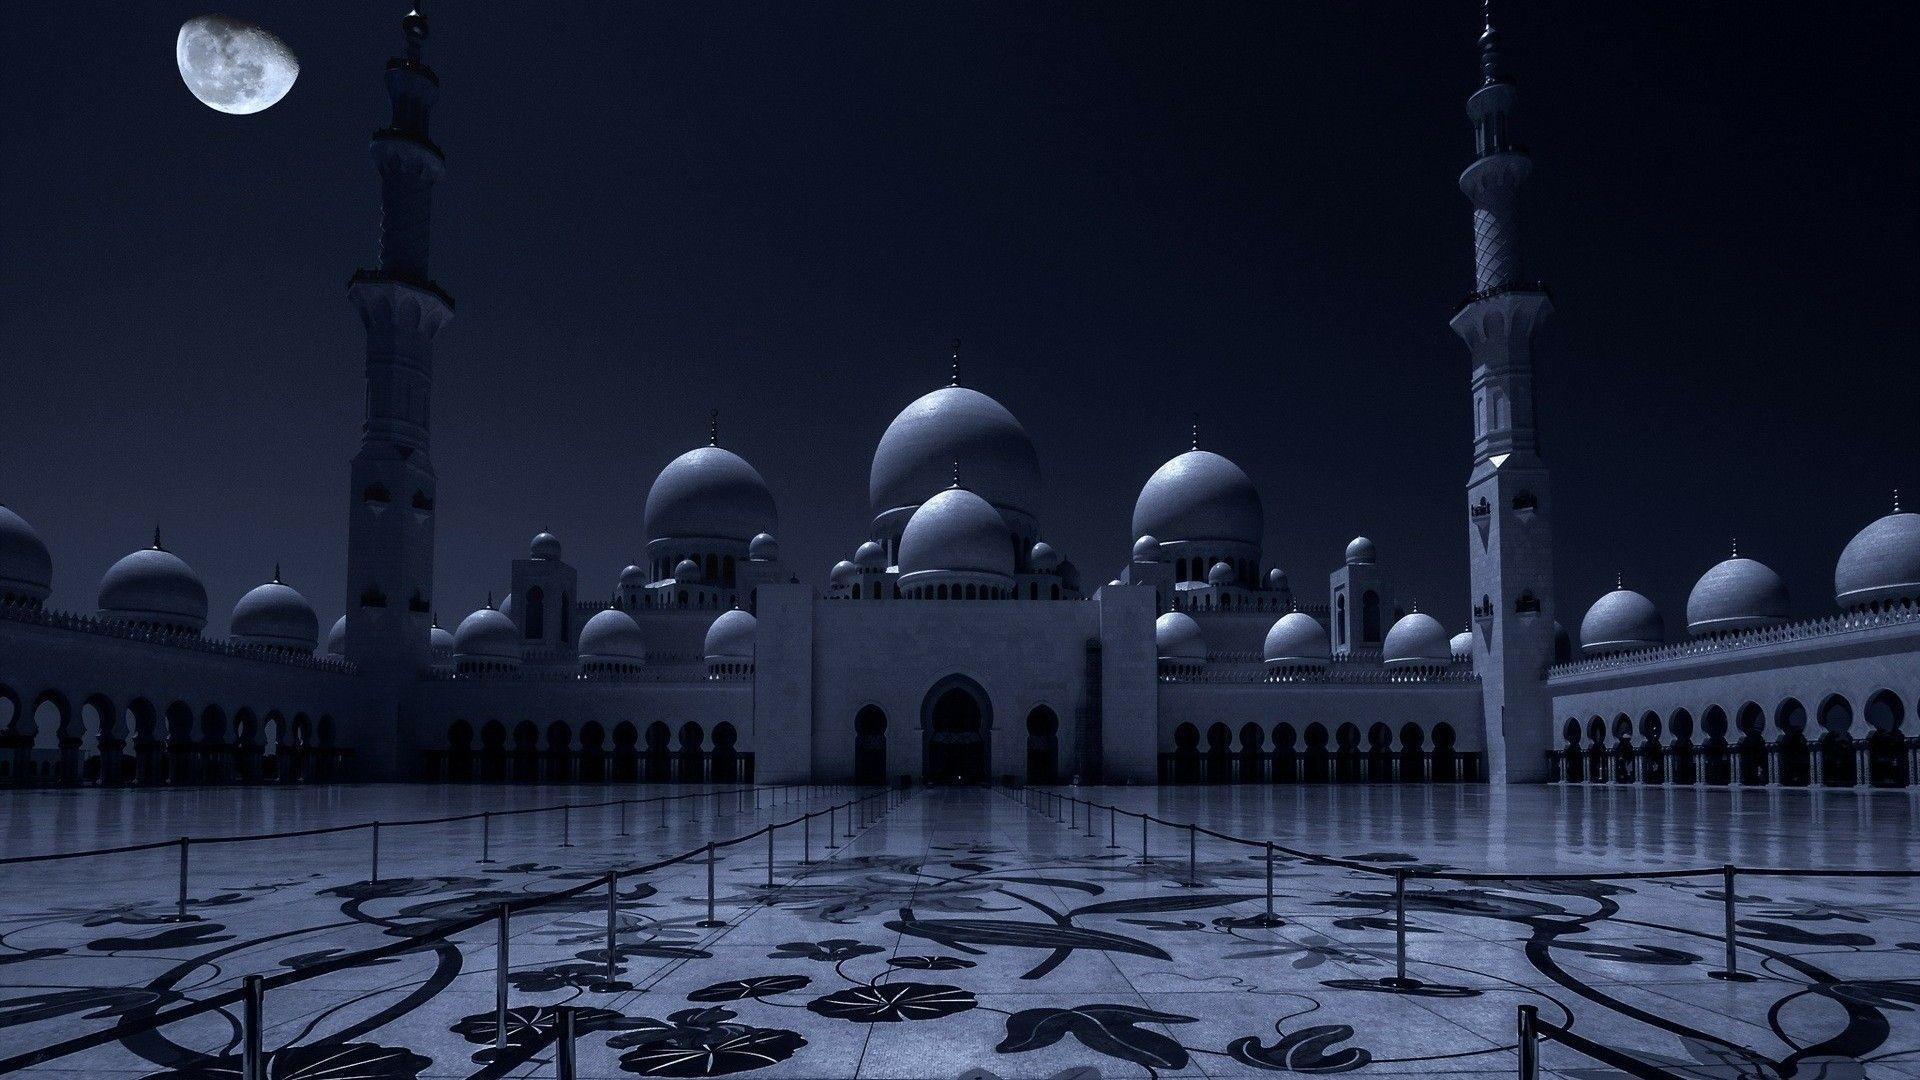 Sheikh Zayed Grand Mosque At Night Dhabi, United Arab Emirates